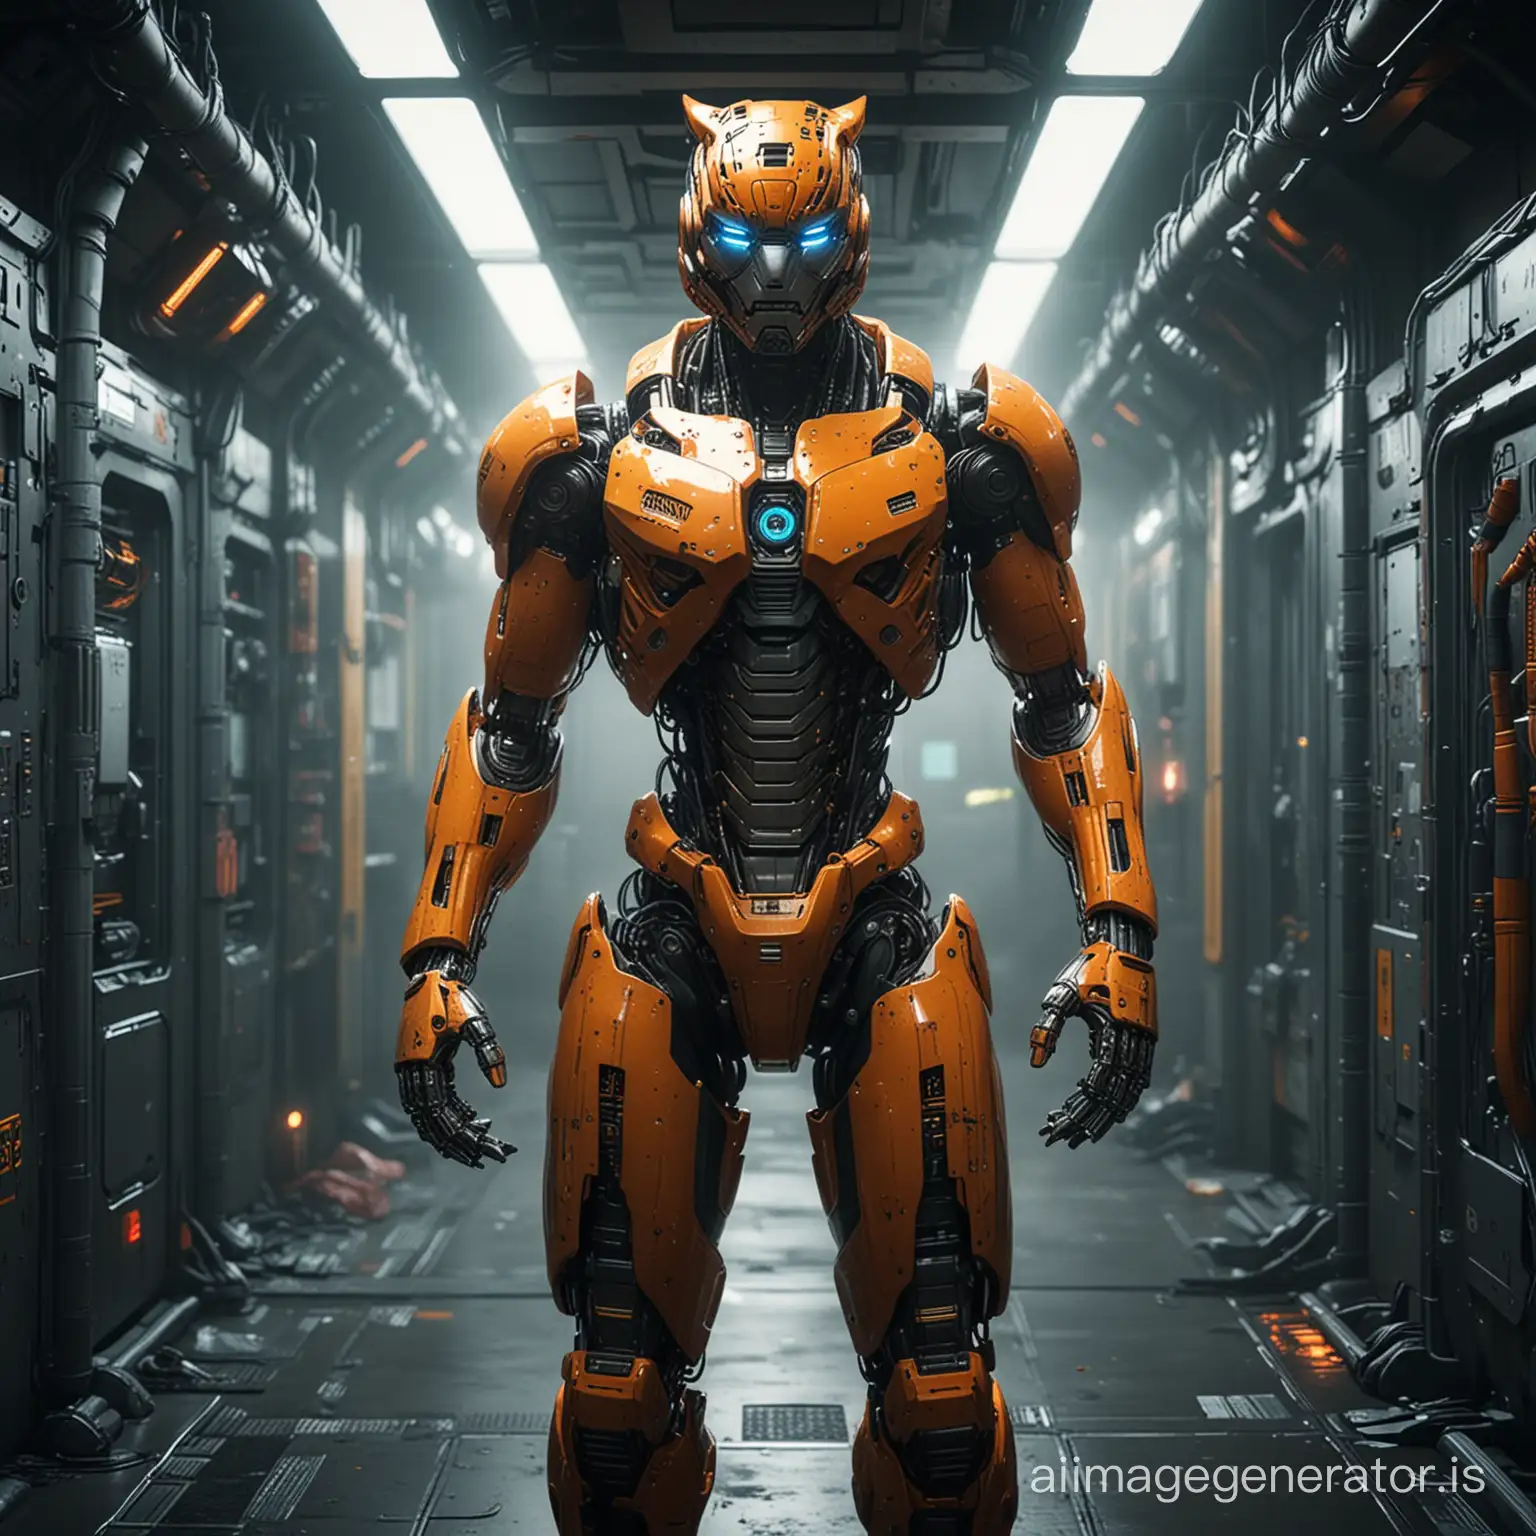 Futuristic-Tiger-Robot-Guarding-Cyberpunk-Corridor